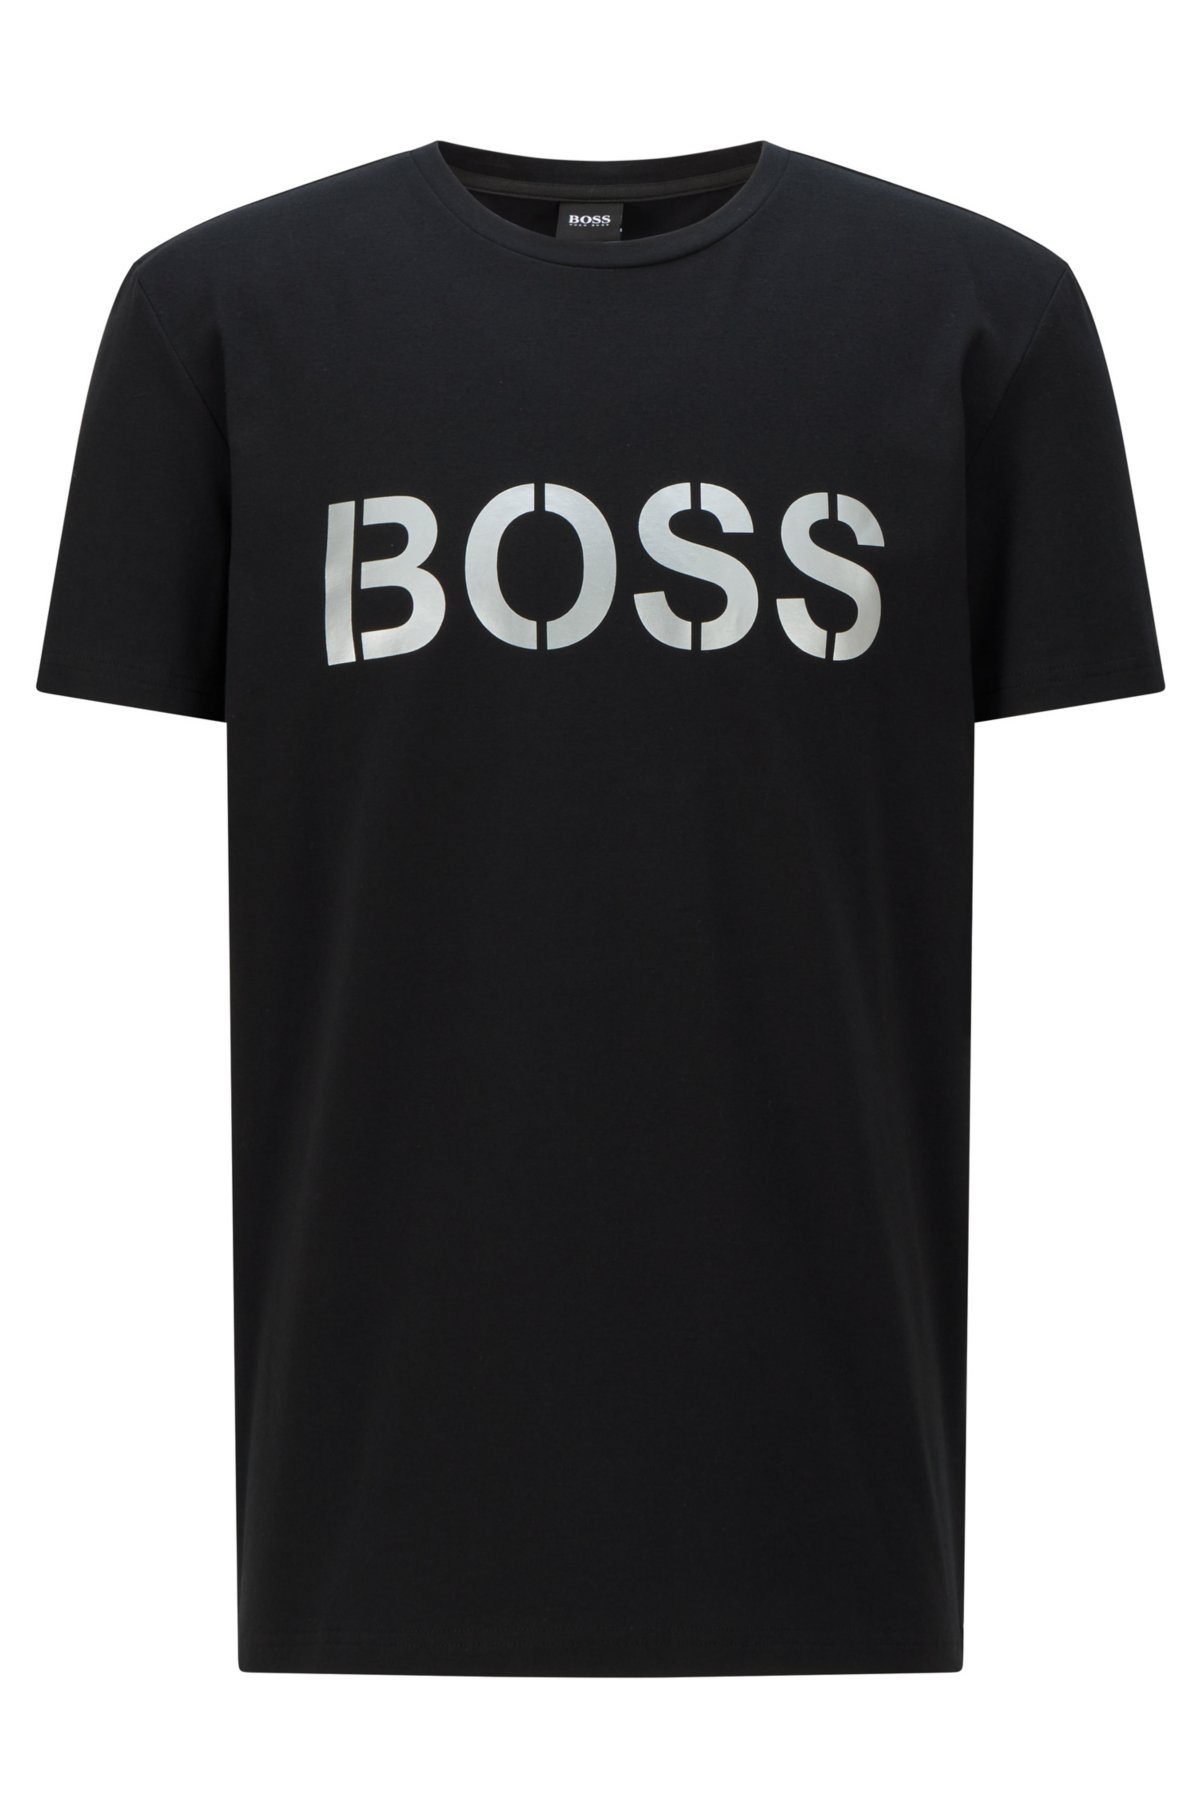 BOSS - Camiseta playera fit con un diseño del logo a